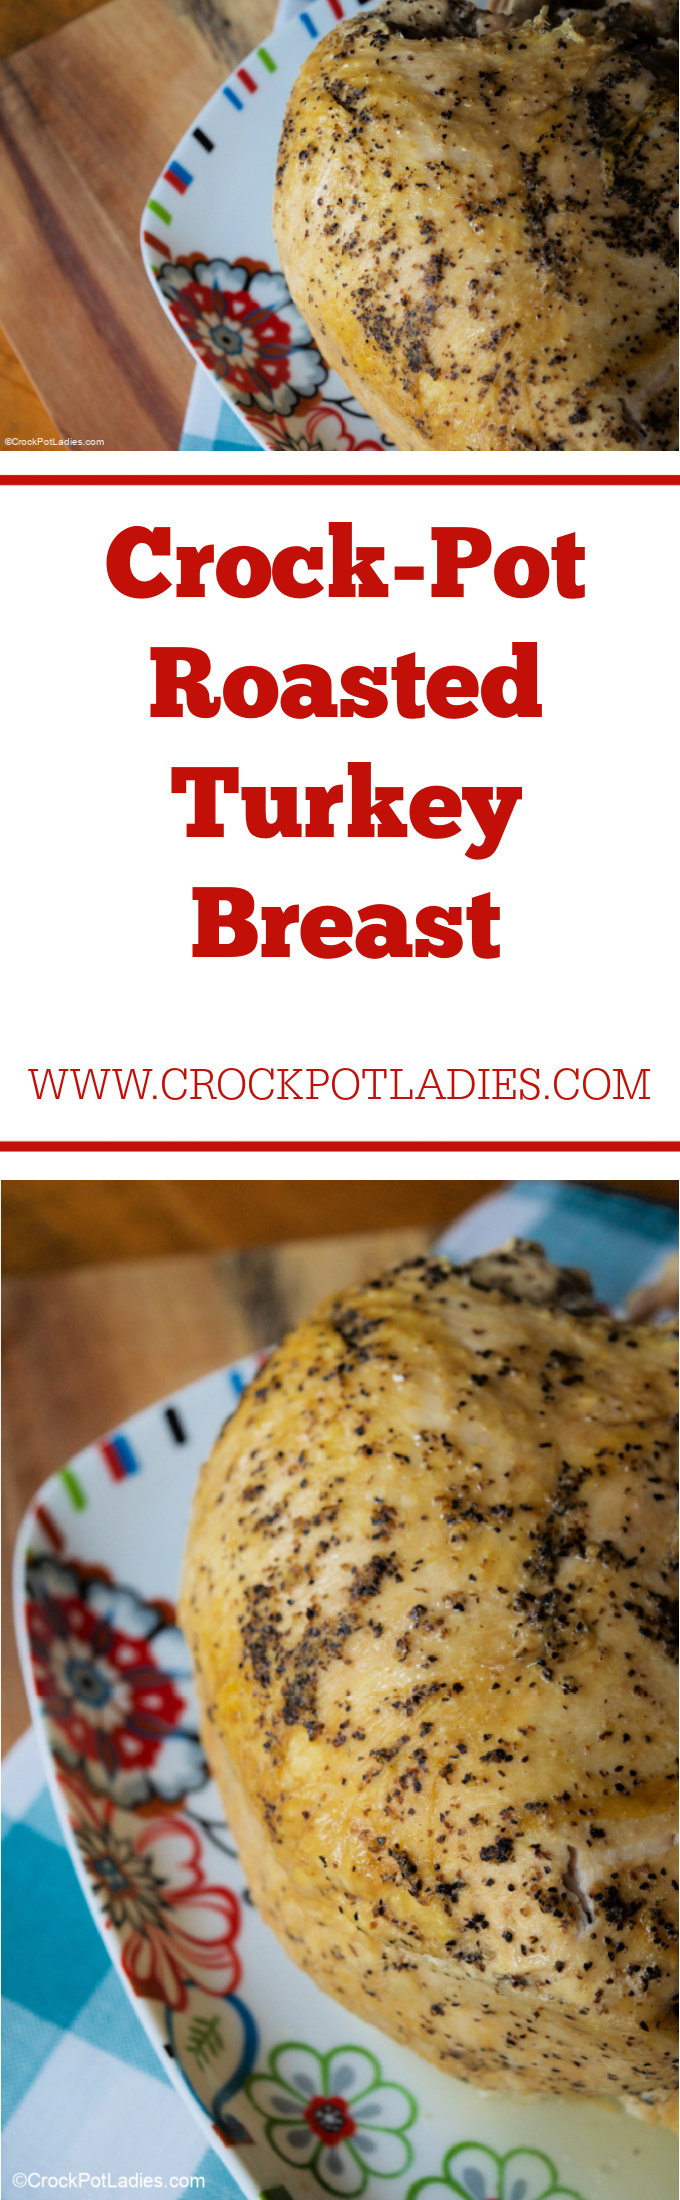 Crock-Pot Roasted Turkey Breast